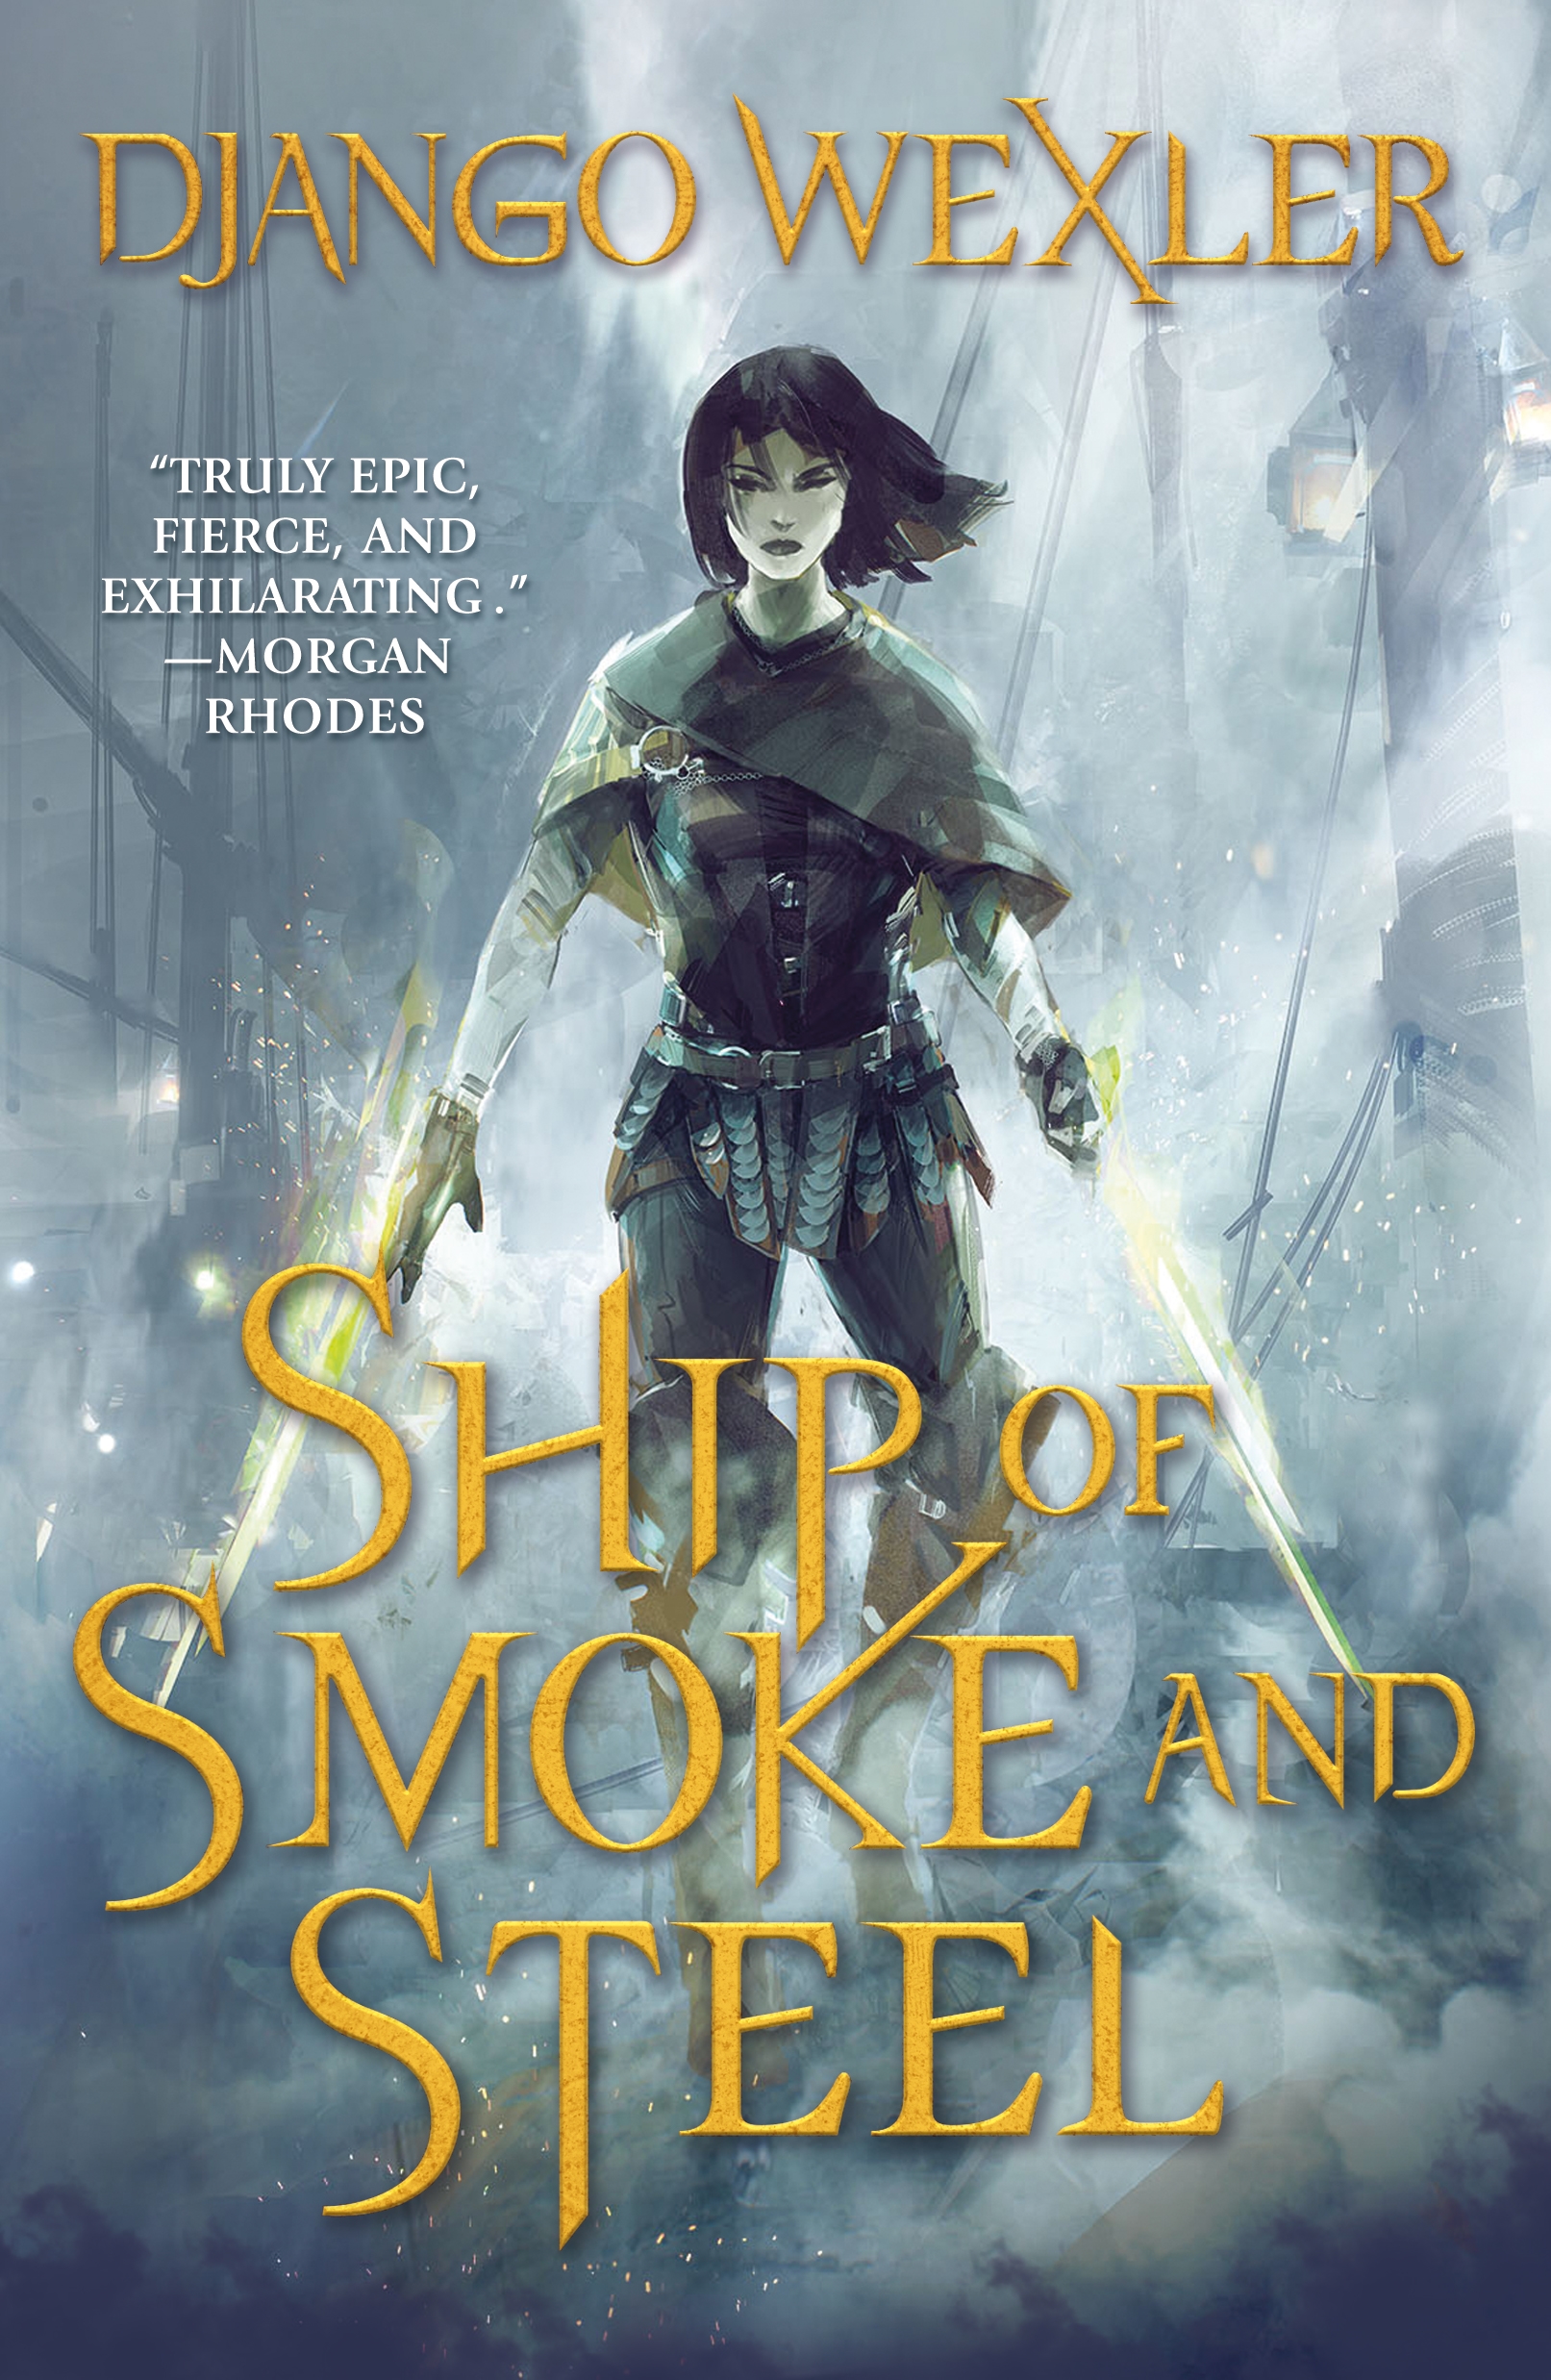 Ship of Smoke and Steel : The Wells of Sorcery, Book One by Django Wexler